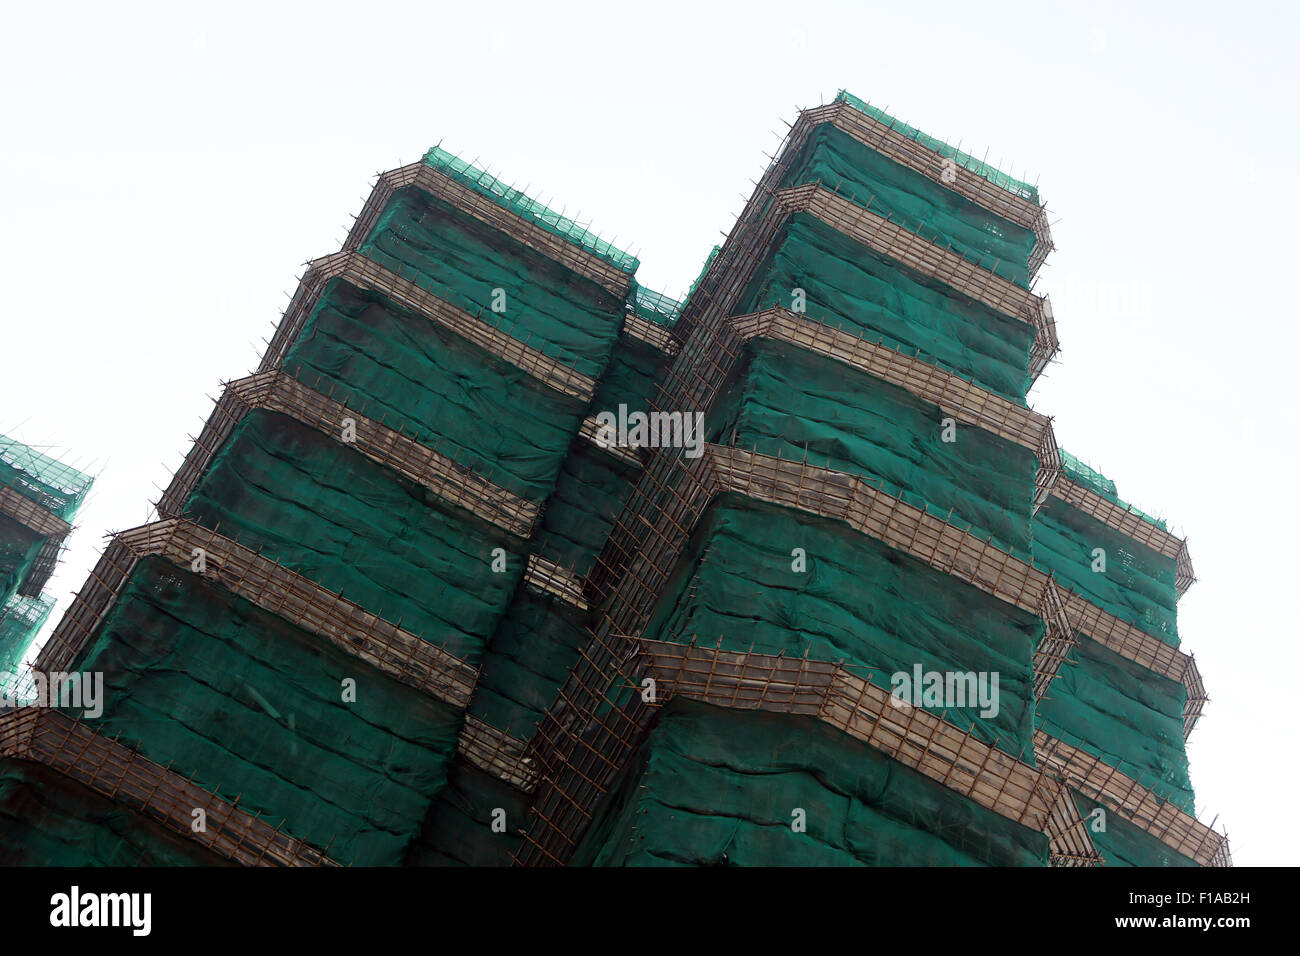 Hong Kong, China, Scaffolding from Bambusstaeben Stock Photo